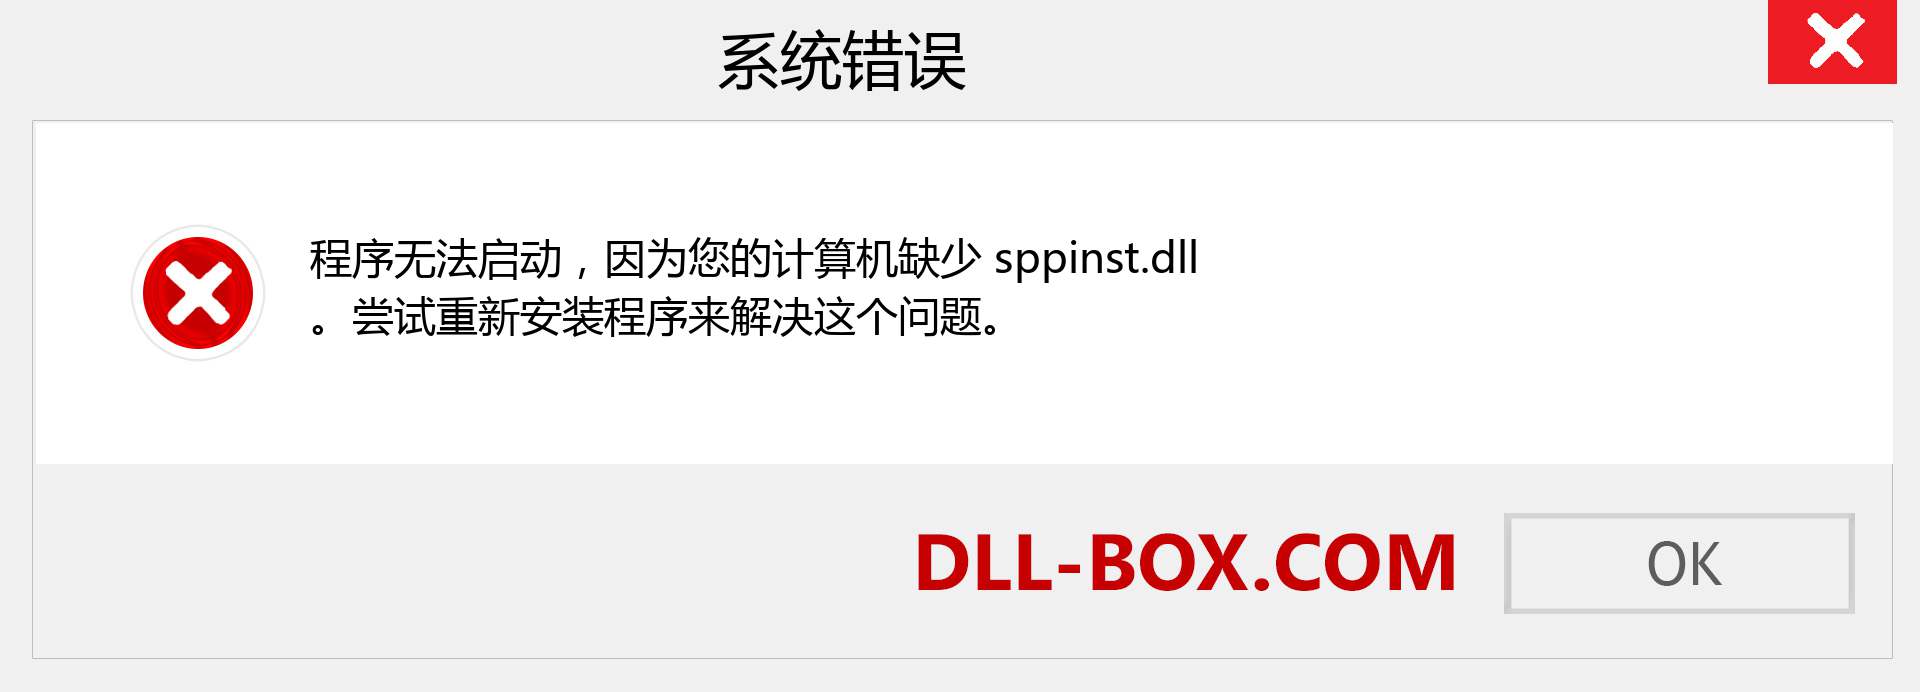 sppinst.dll 文件丢失？。 适用于 Windows 7、8、10 的下载 - 修复 Windows、照片、图像上的 sppinst dll 丢失错误